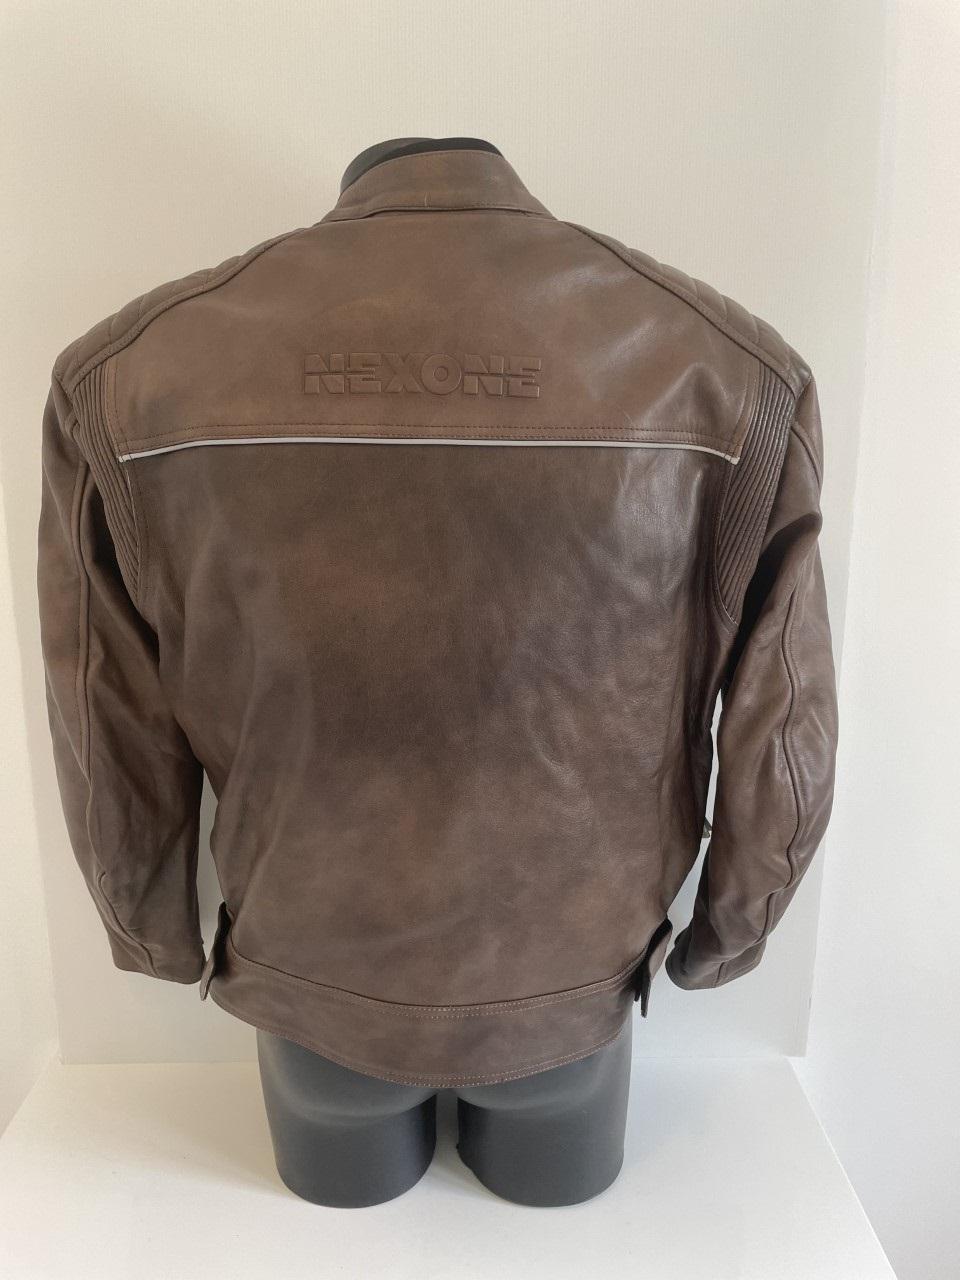 Blouson veste pour moto Homme Nexone Cuir Giorgio Marron Taille XL homologué CE